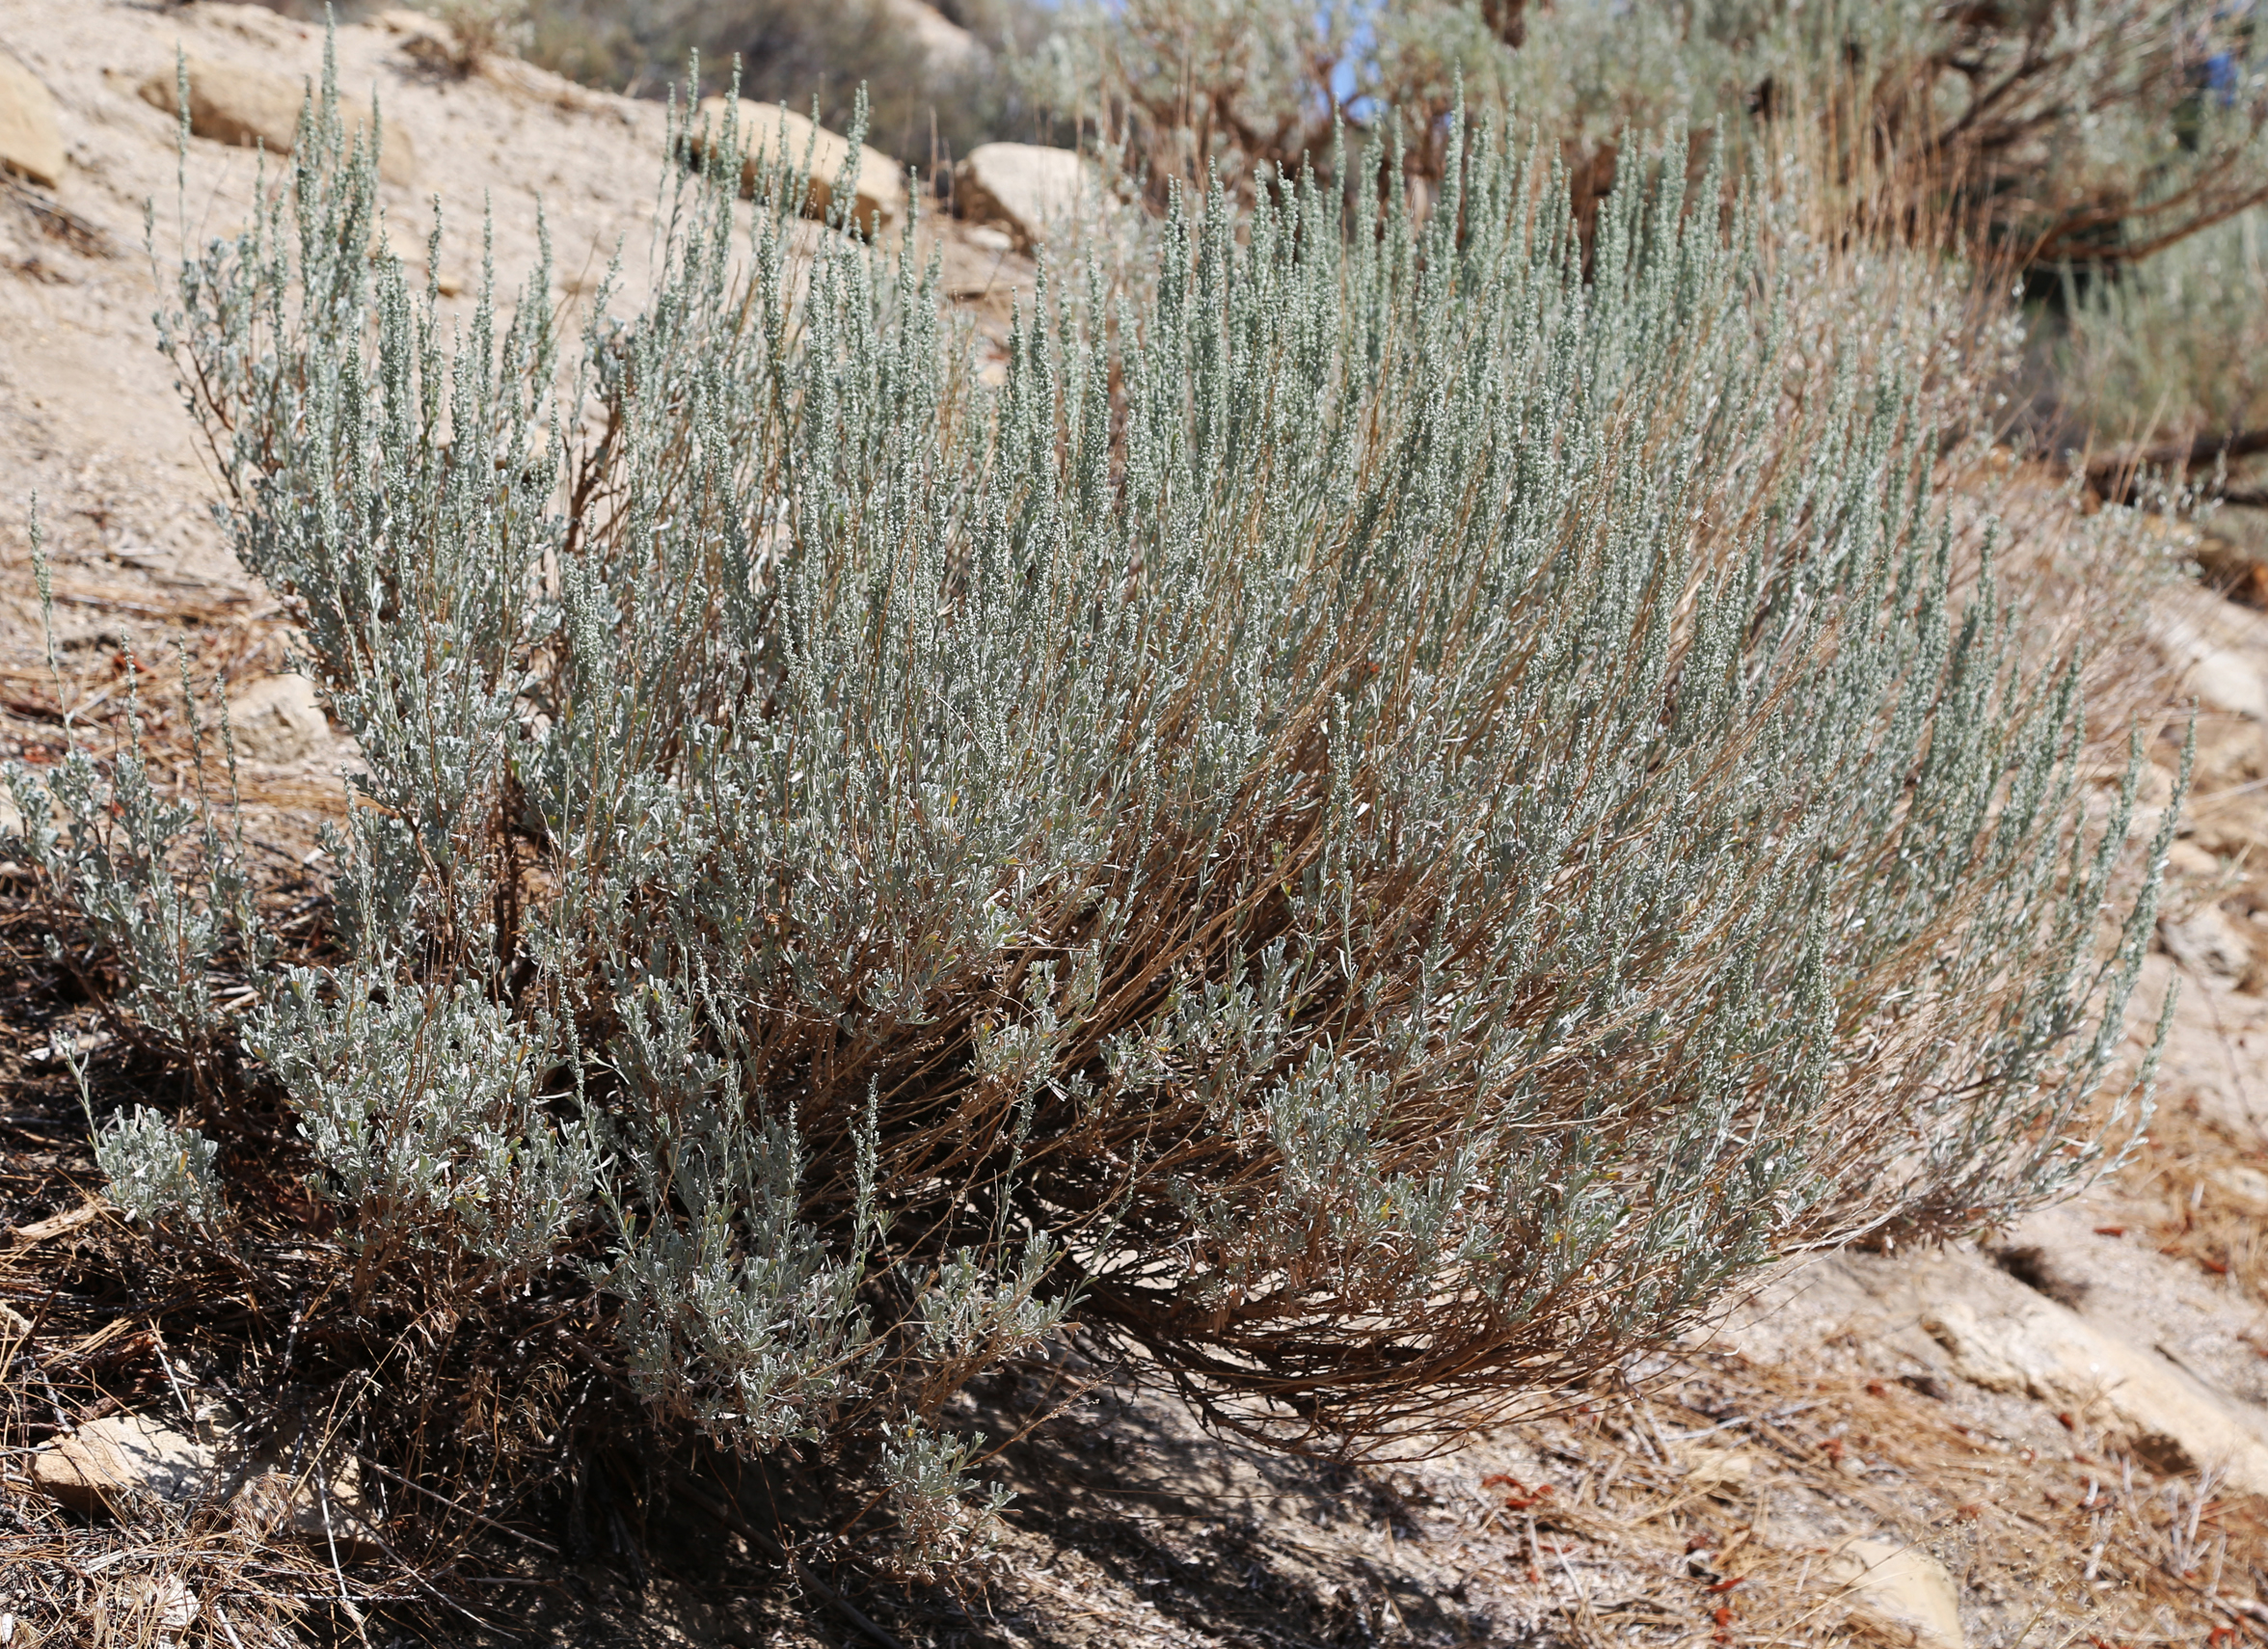 File:Artemisia tridentata sagebrush bush.jpg - Wikimedia Commons